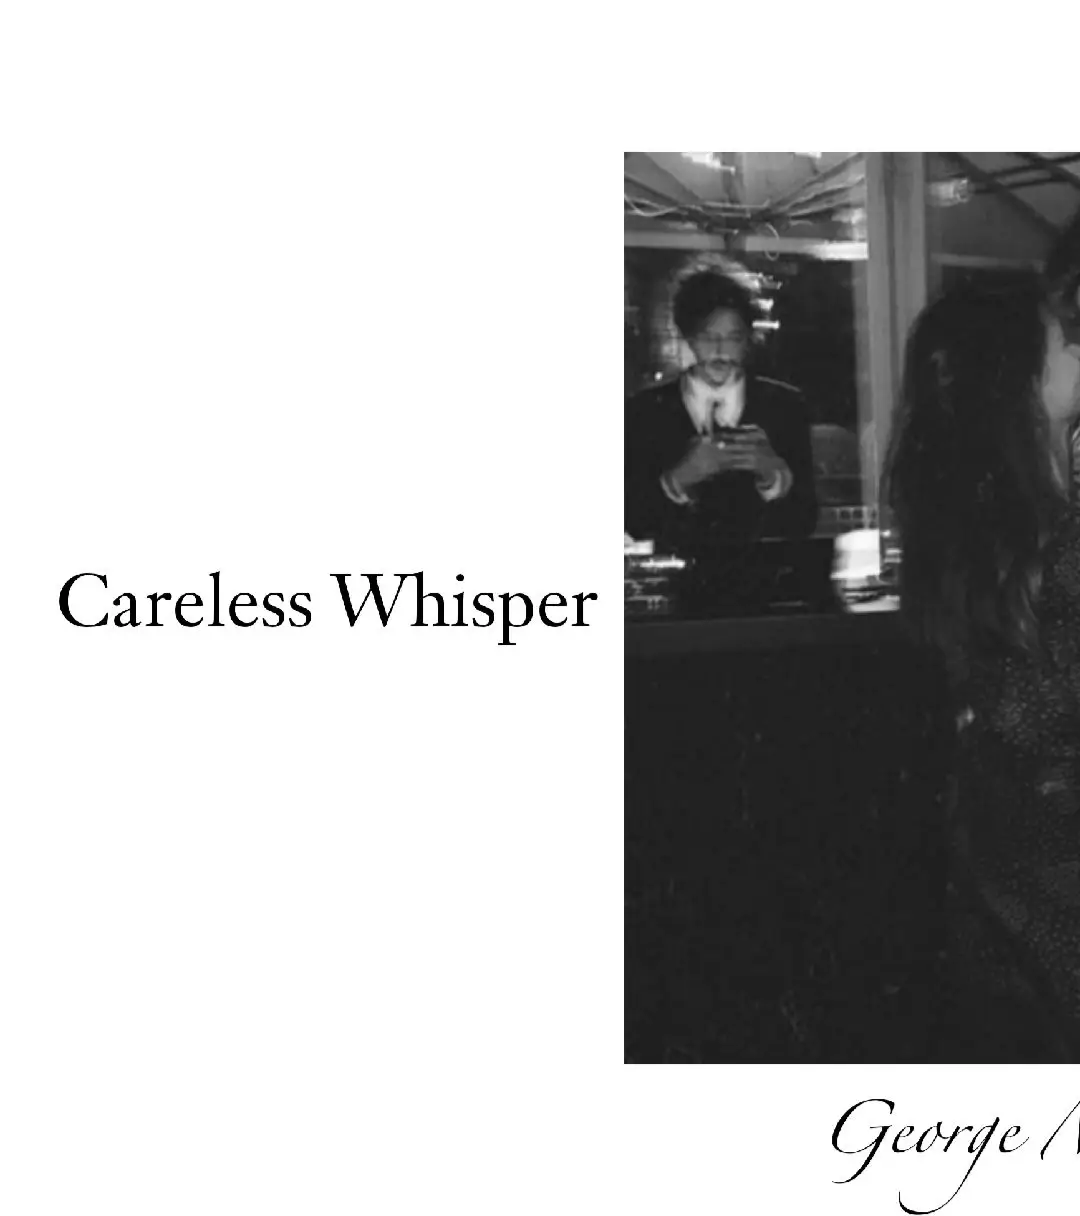 Careless whisper - George Michael 🎶 #carelesswhisper #georgemichael #viral #song #music #lyrics #frypgシ #fry #dance #lovesong #classicalmusic #oldmusic 